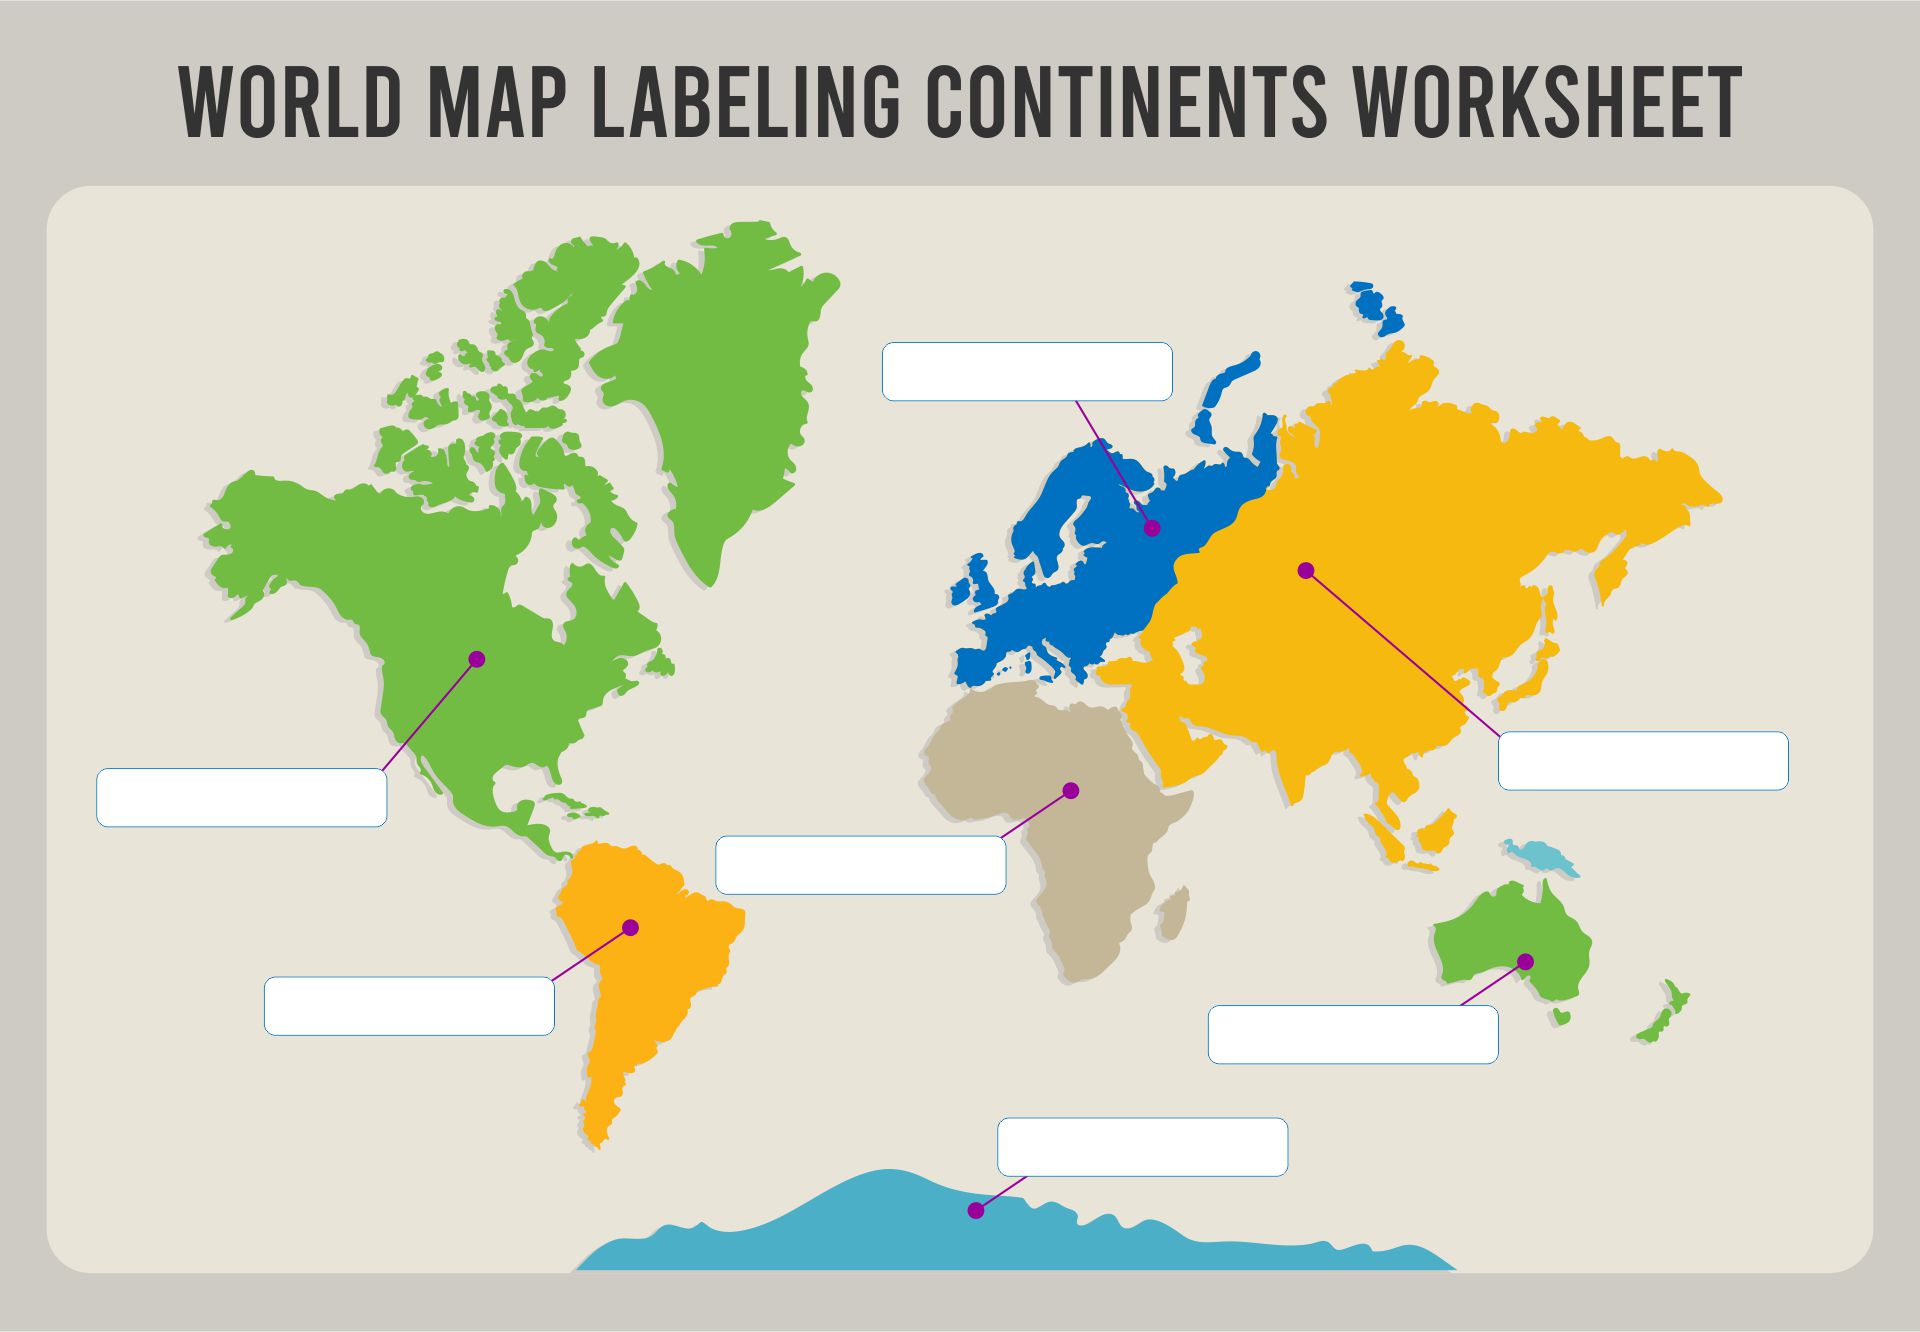 World Map Worksheet Printable